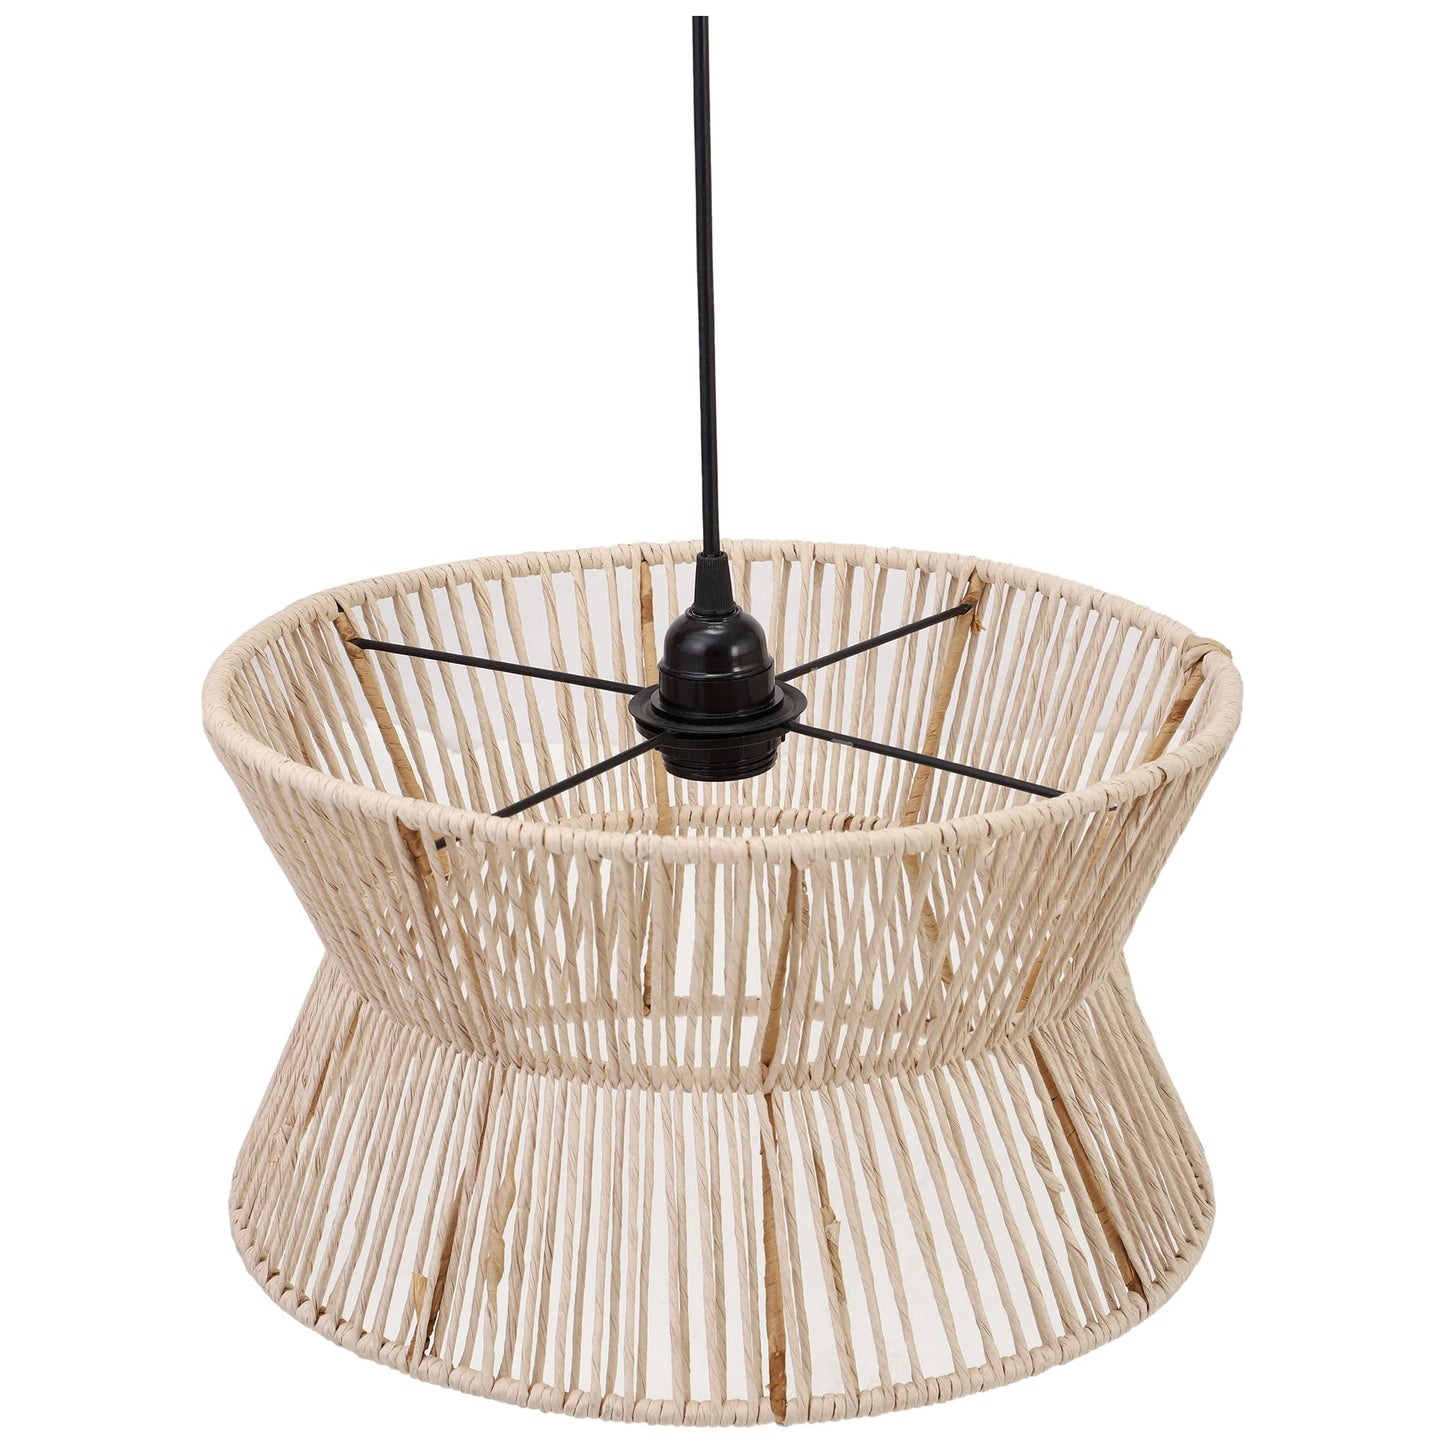 AKWAY Rattan Seagrass Paper Raffia Kauna Grass Wicker Lamp Premium Ceiling Light/Pendant Light Handwoven - 1 Piece (12" Dia x 7'H) (Beige) (Bulb not Included)- Akway